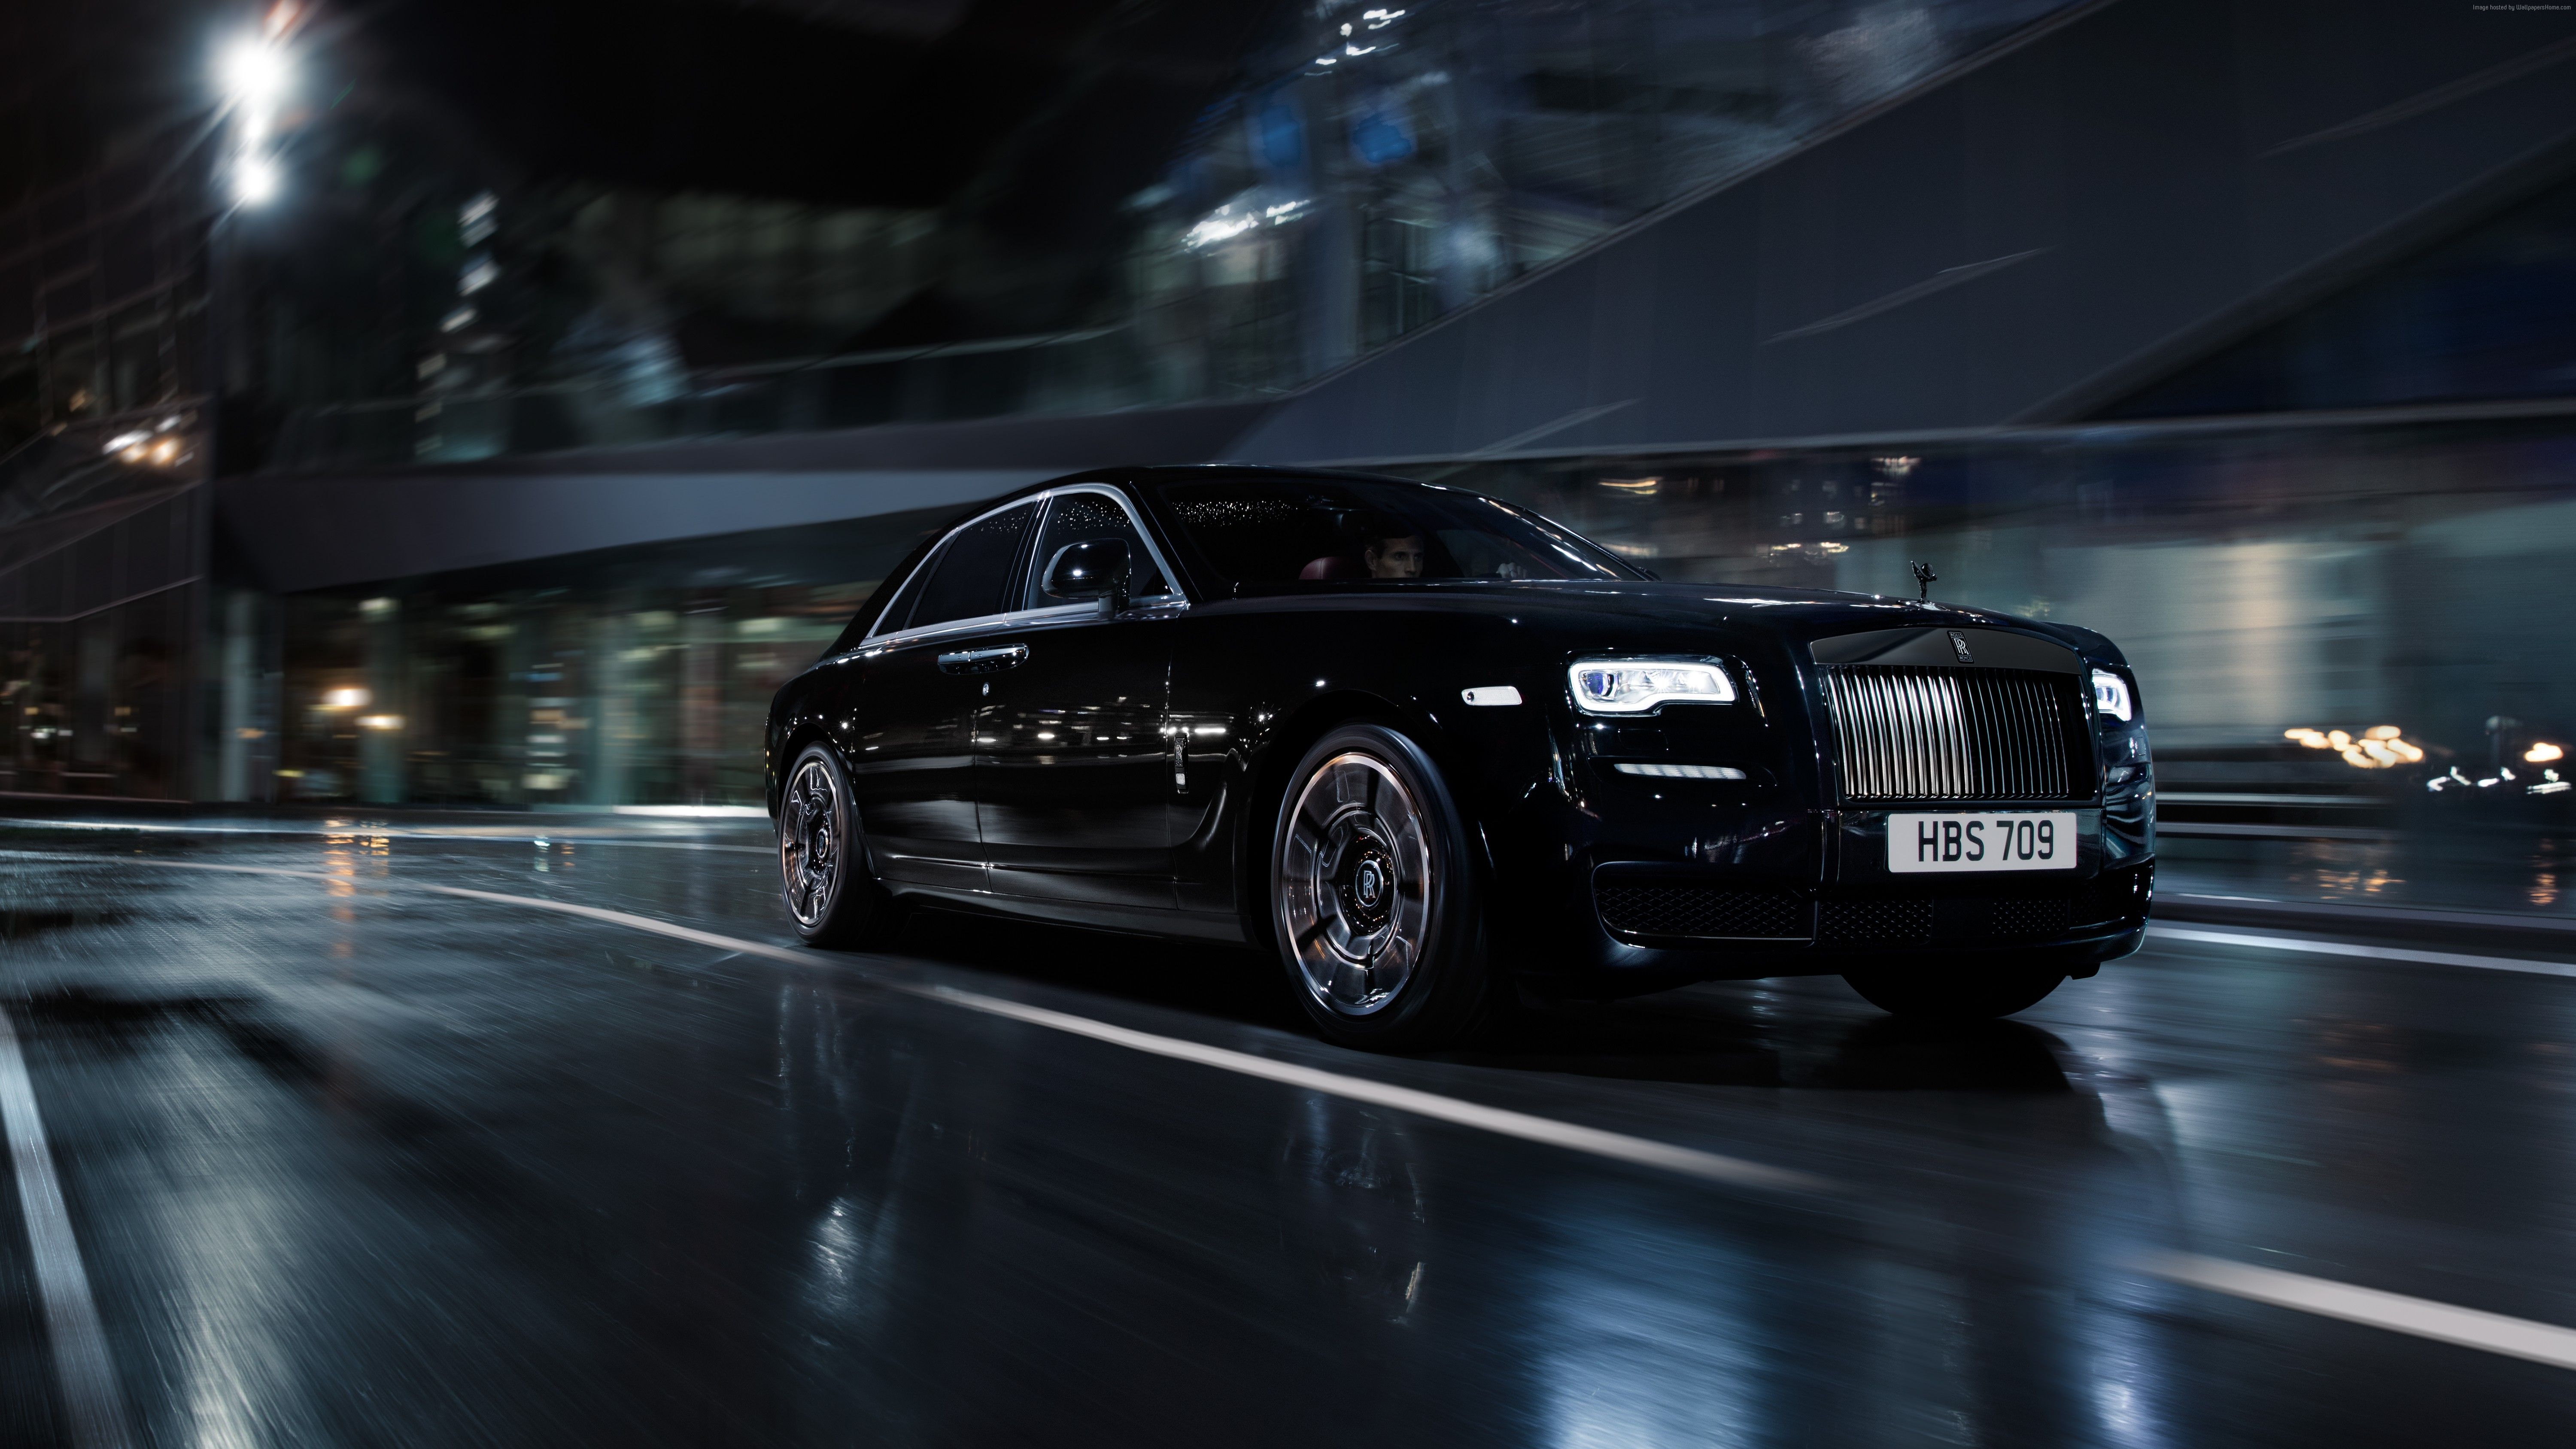 Free Download 110228 Geneva Auto Show 2016 Black Rolls Royce Wraith Black [6000x3375] For Your Desktop, Mobile & Tablet. Explore Rolls Royce Wraith Wallpaper. Rolls Royce Wraith Wallpaper, Rolls Royce HD